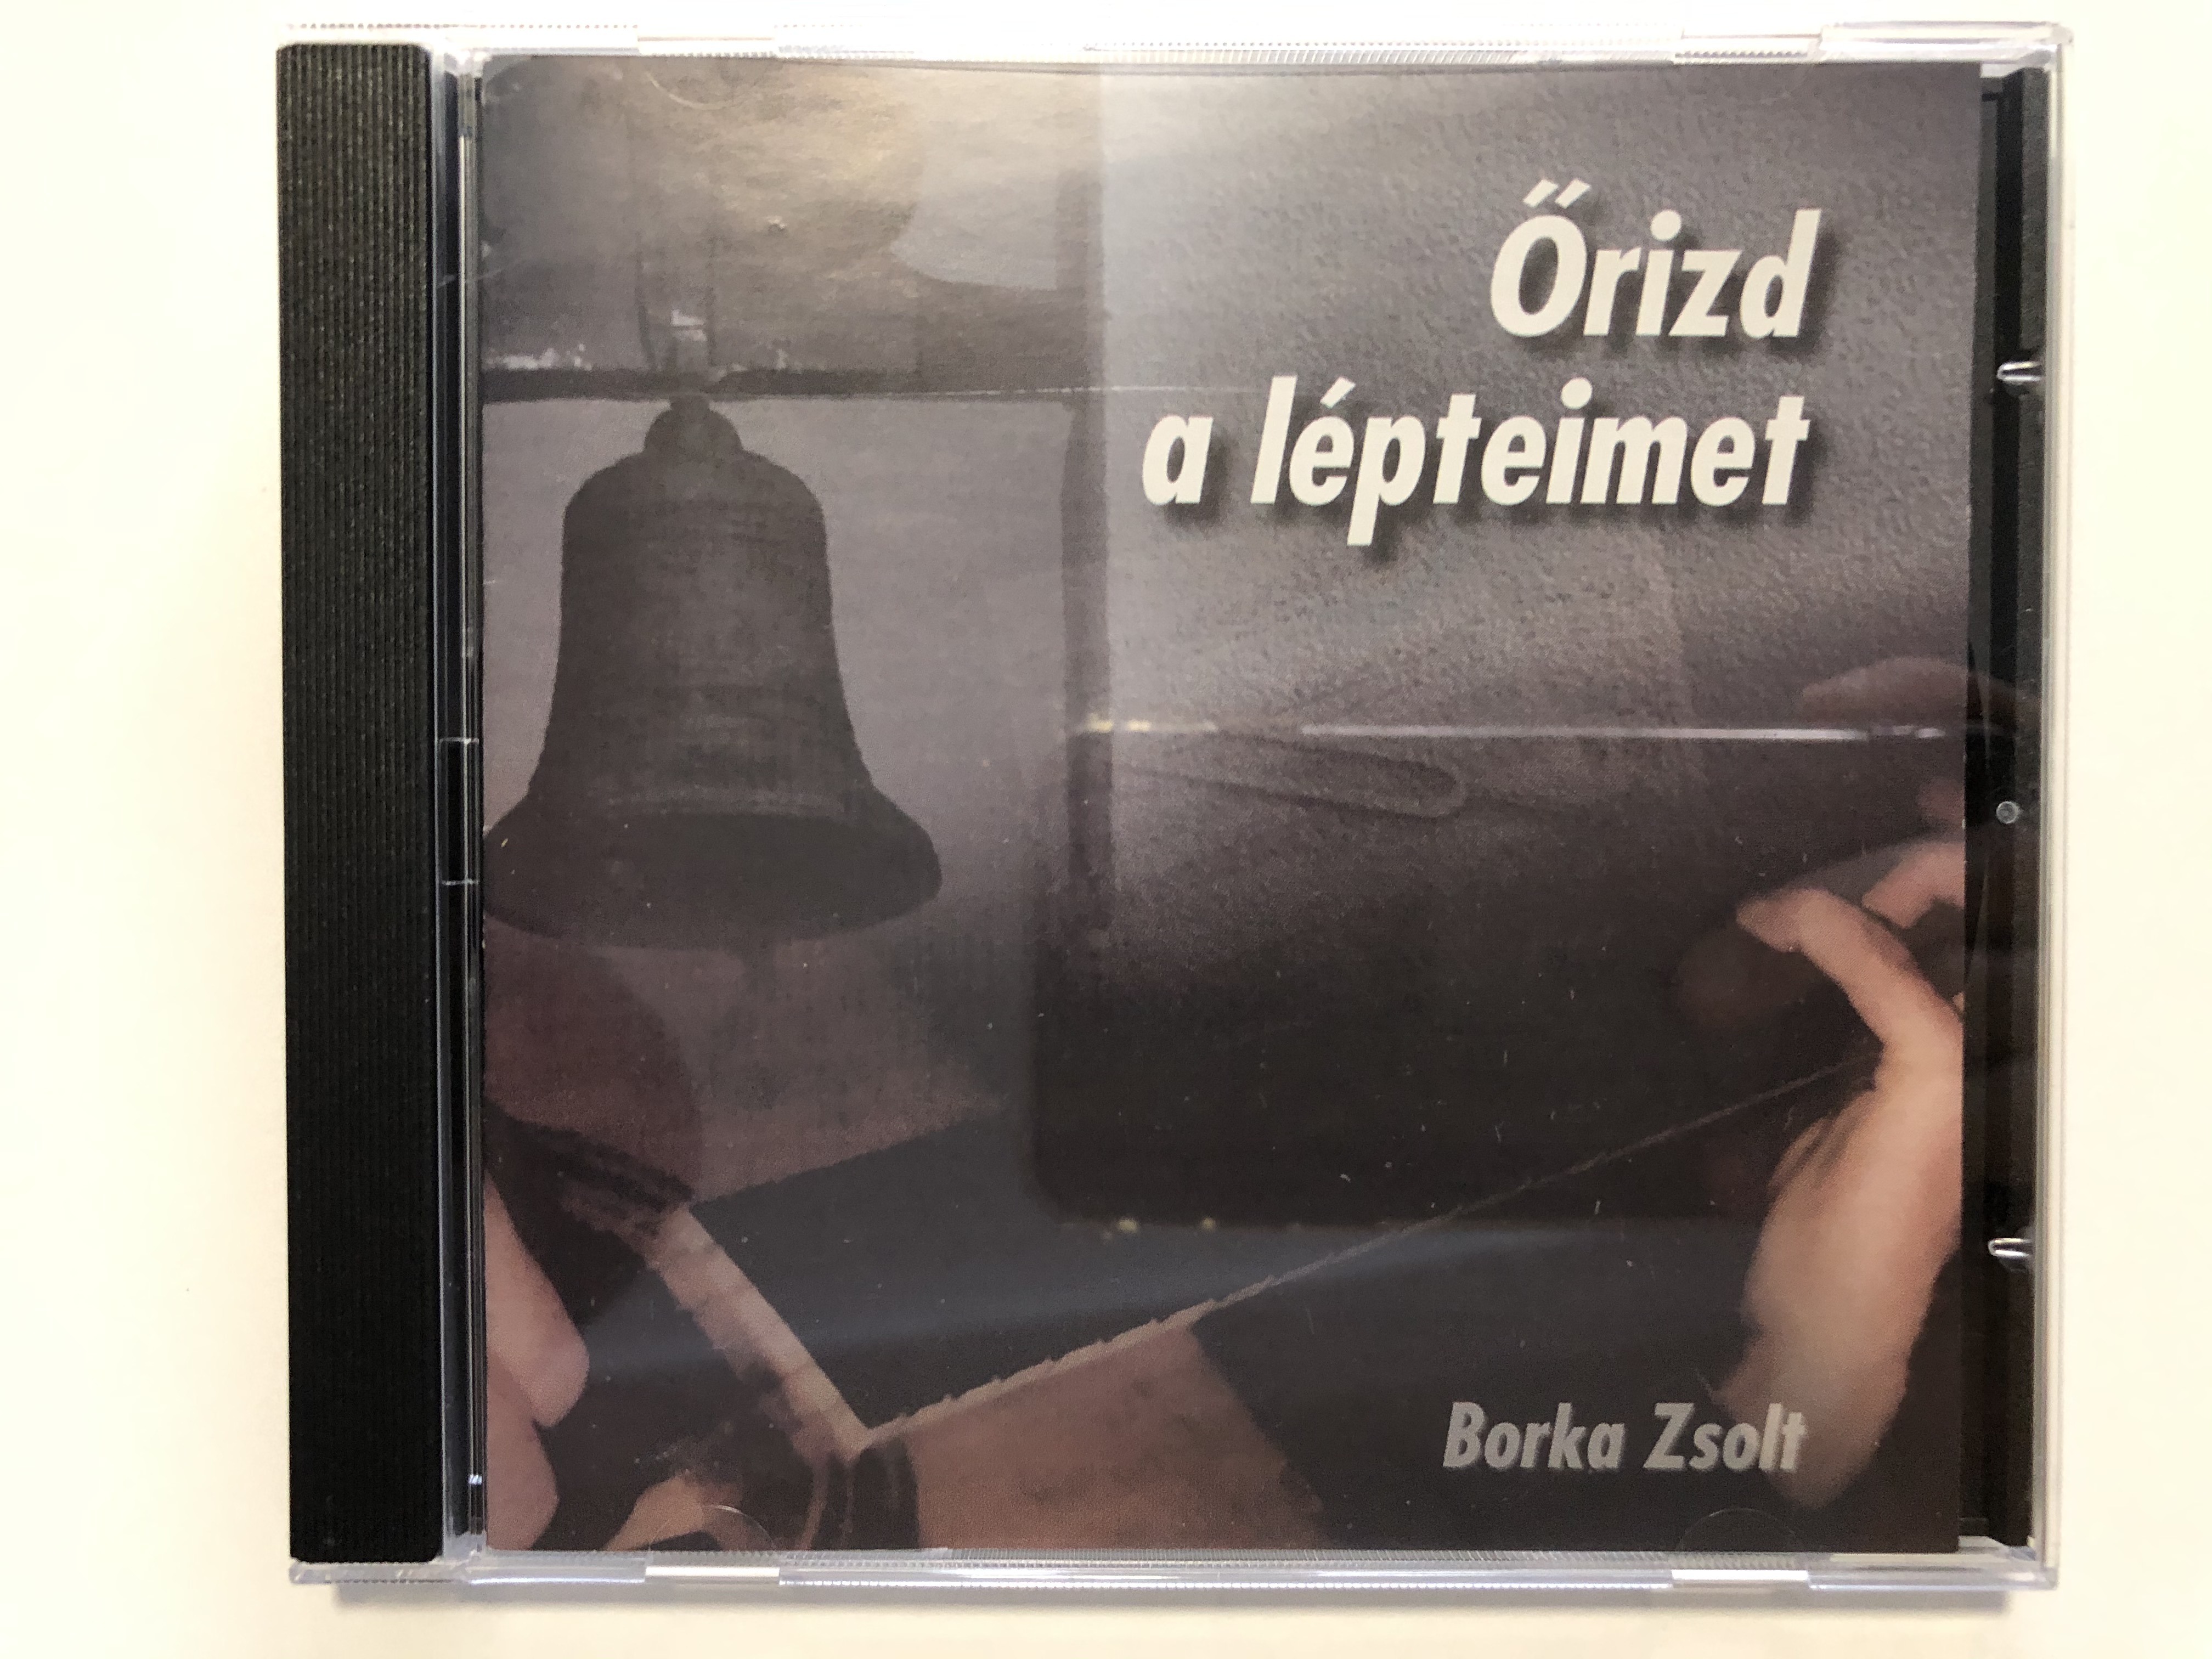 -rizd-a-l-pteimet-borka-zsolt-docete-et-educate-alap-tv-ny-audio-cd-1999-1-.jpg